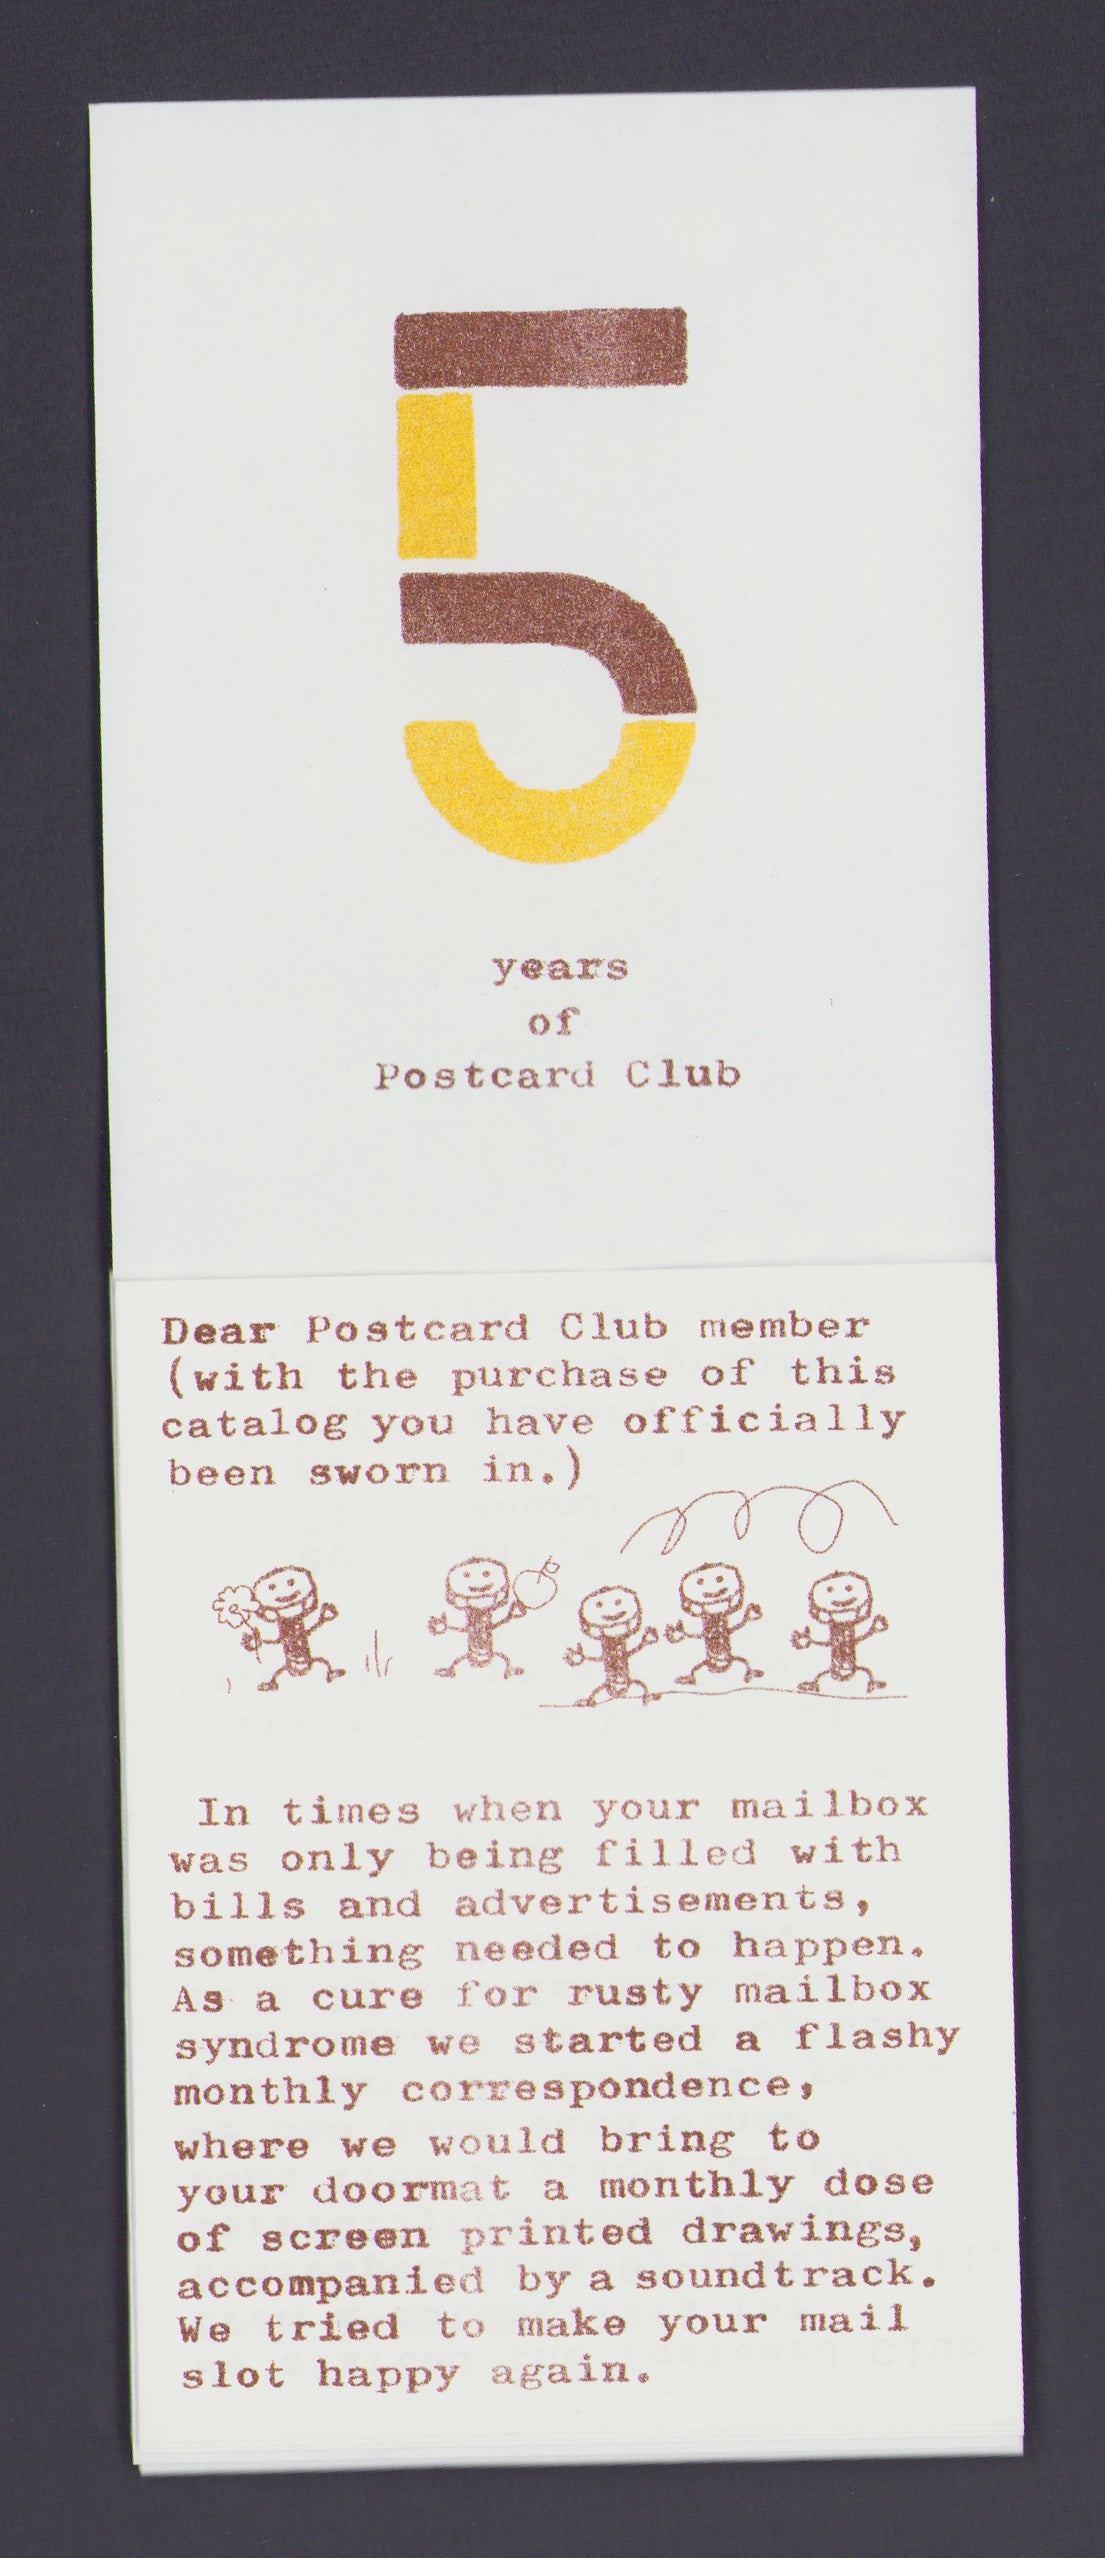 the postcard club - 5 years catalog